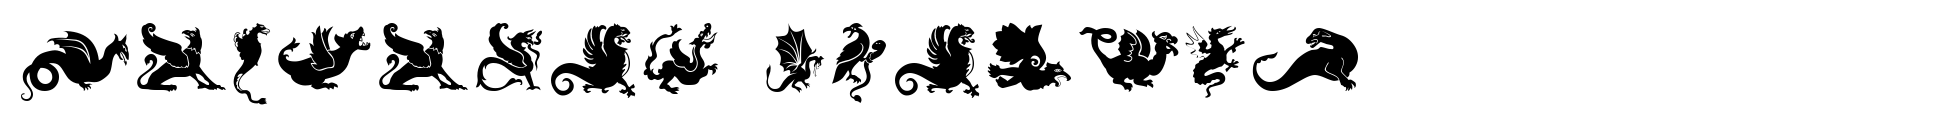 Medieval Dragons